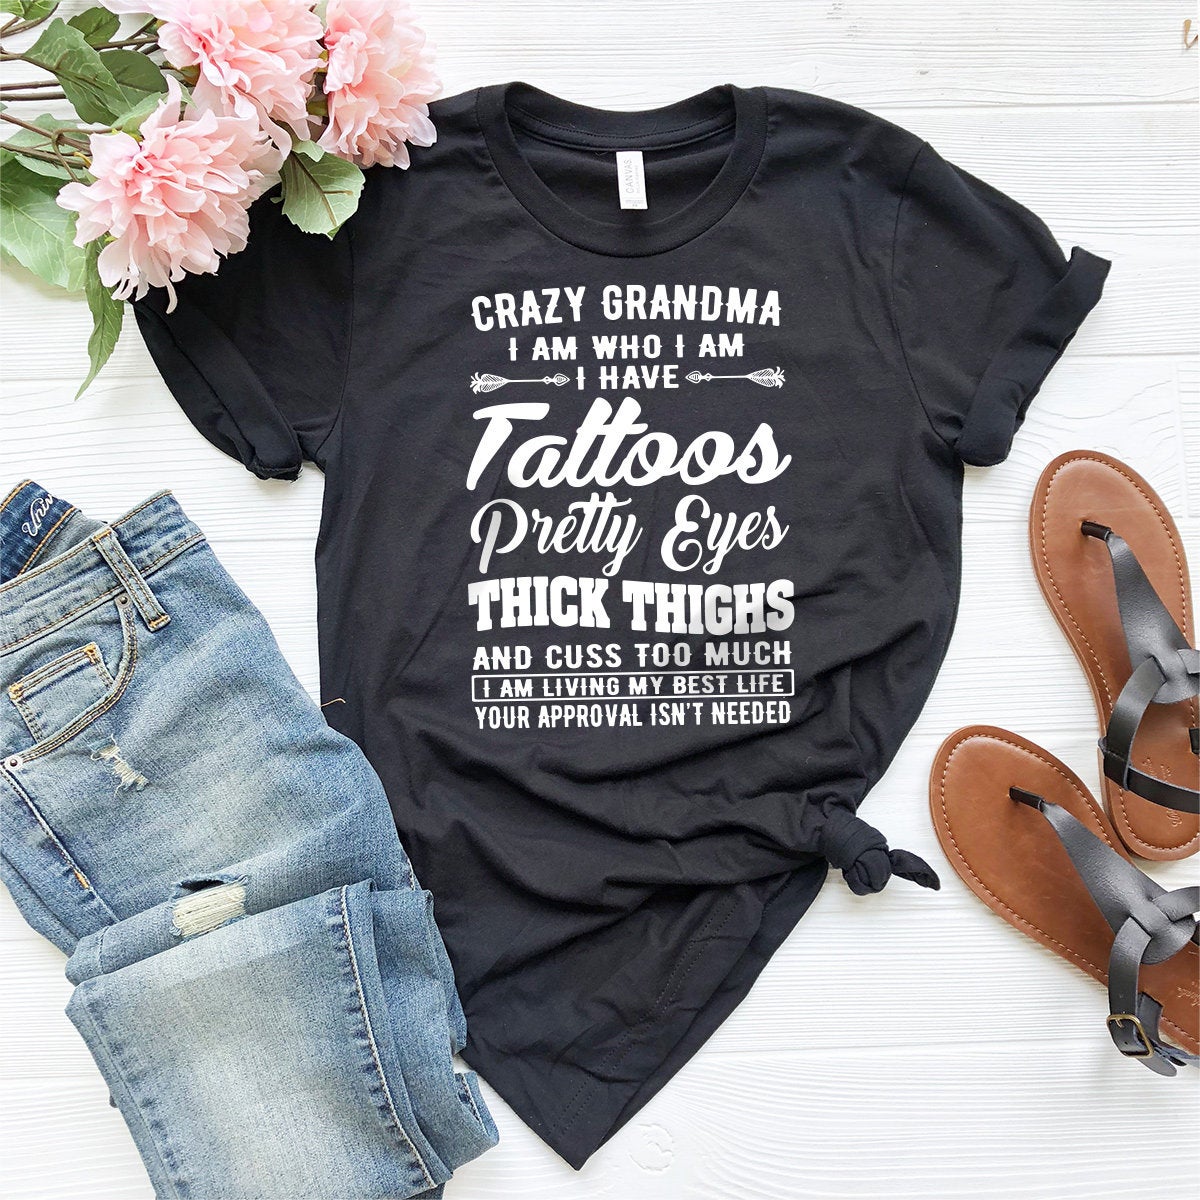 Grandma Shirt, Crazy Grandma Shirt, Living My Best Life Shirt, Gift For Grandma, Motivational Shirt, Feminist Shirt, Nana Shirt - Fastdeliverytees.com